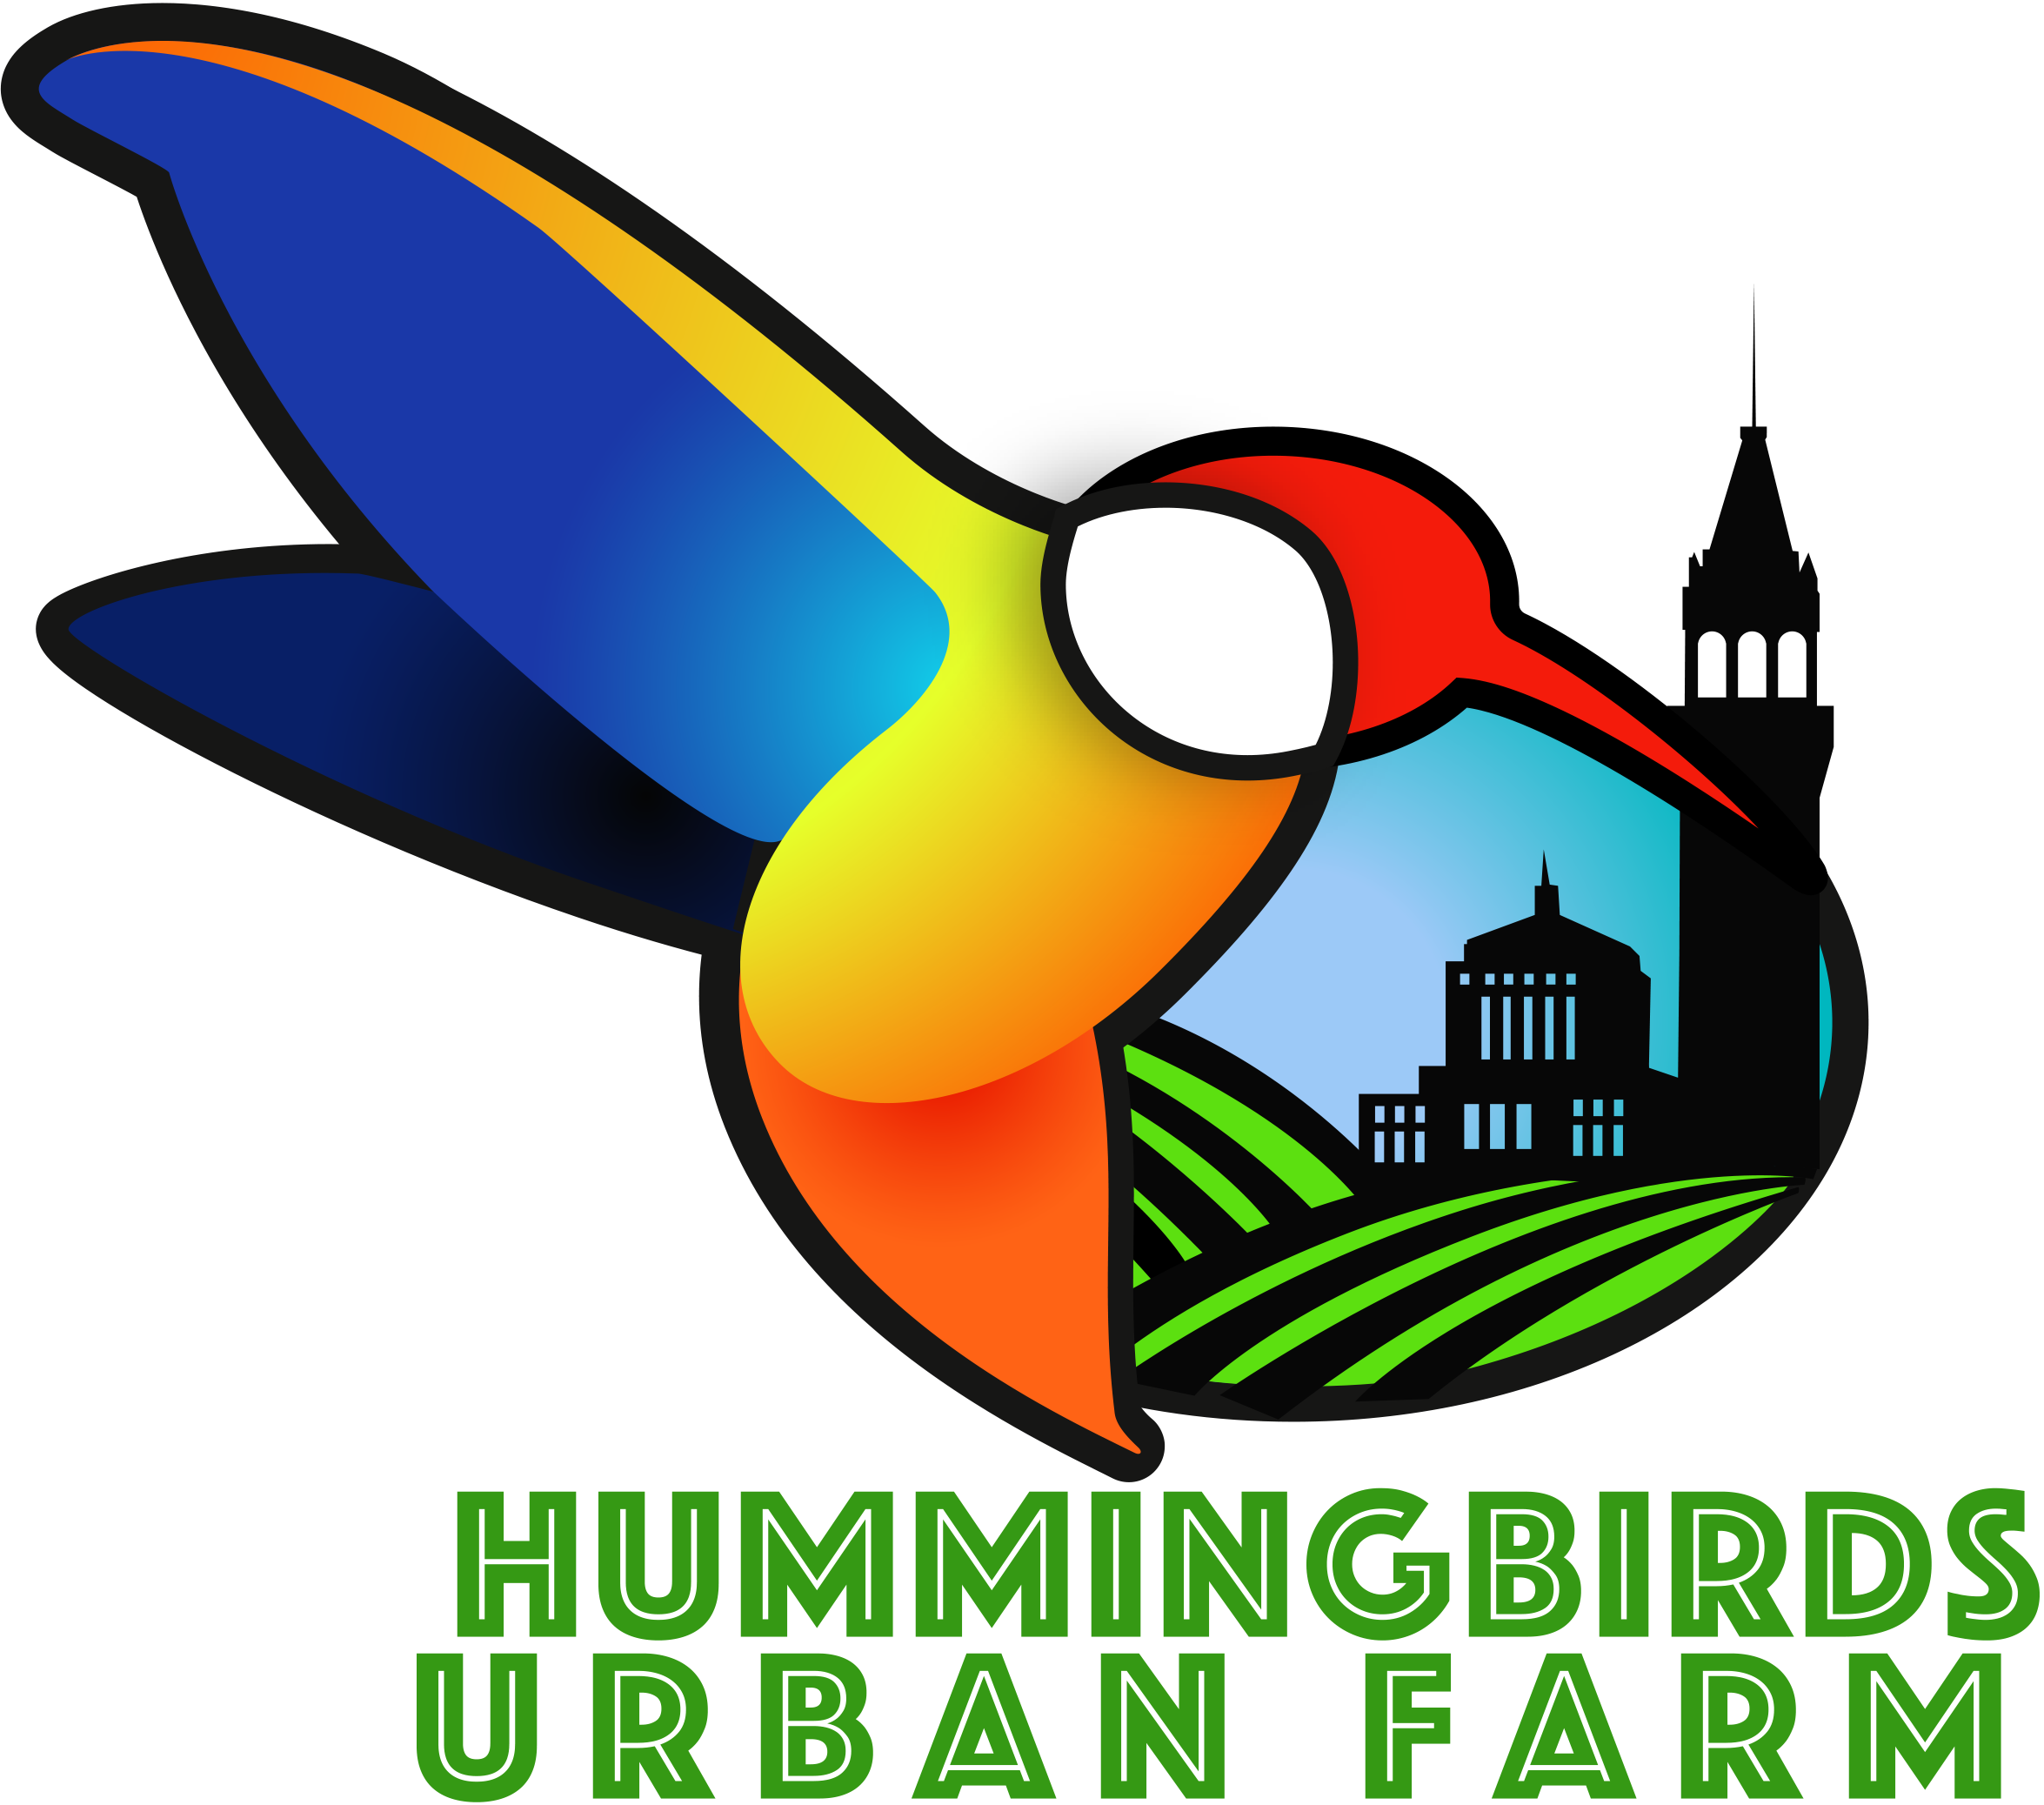 Hummingbirds Urban Farm